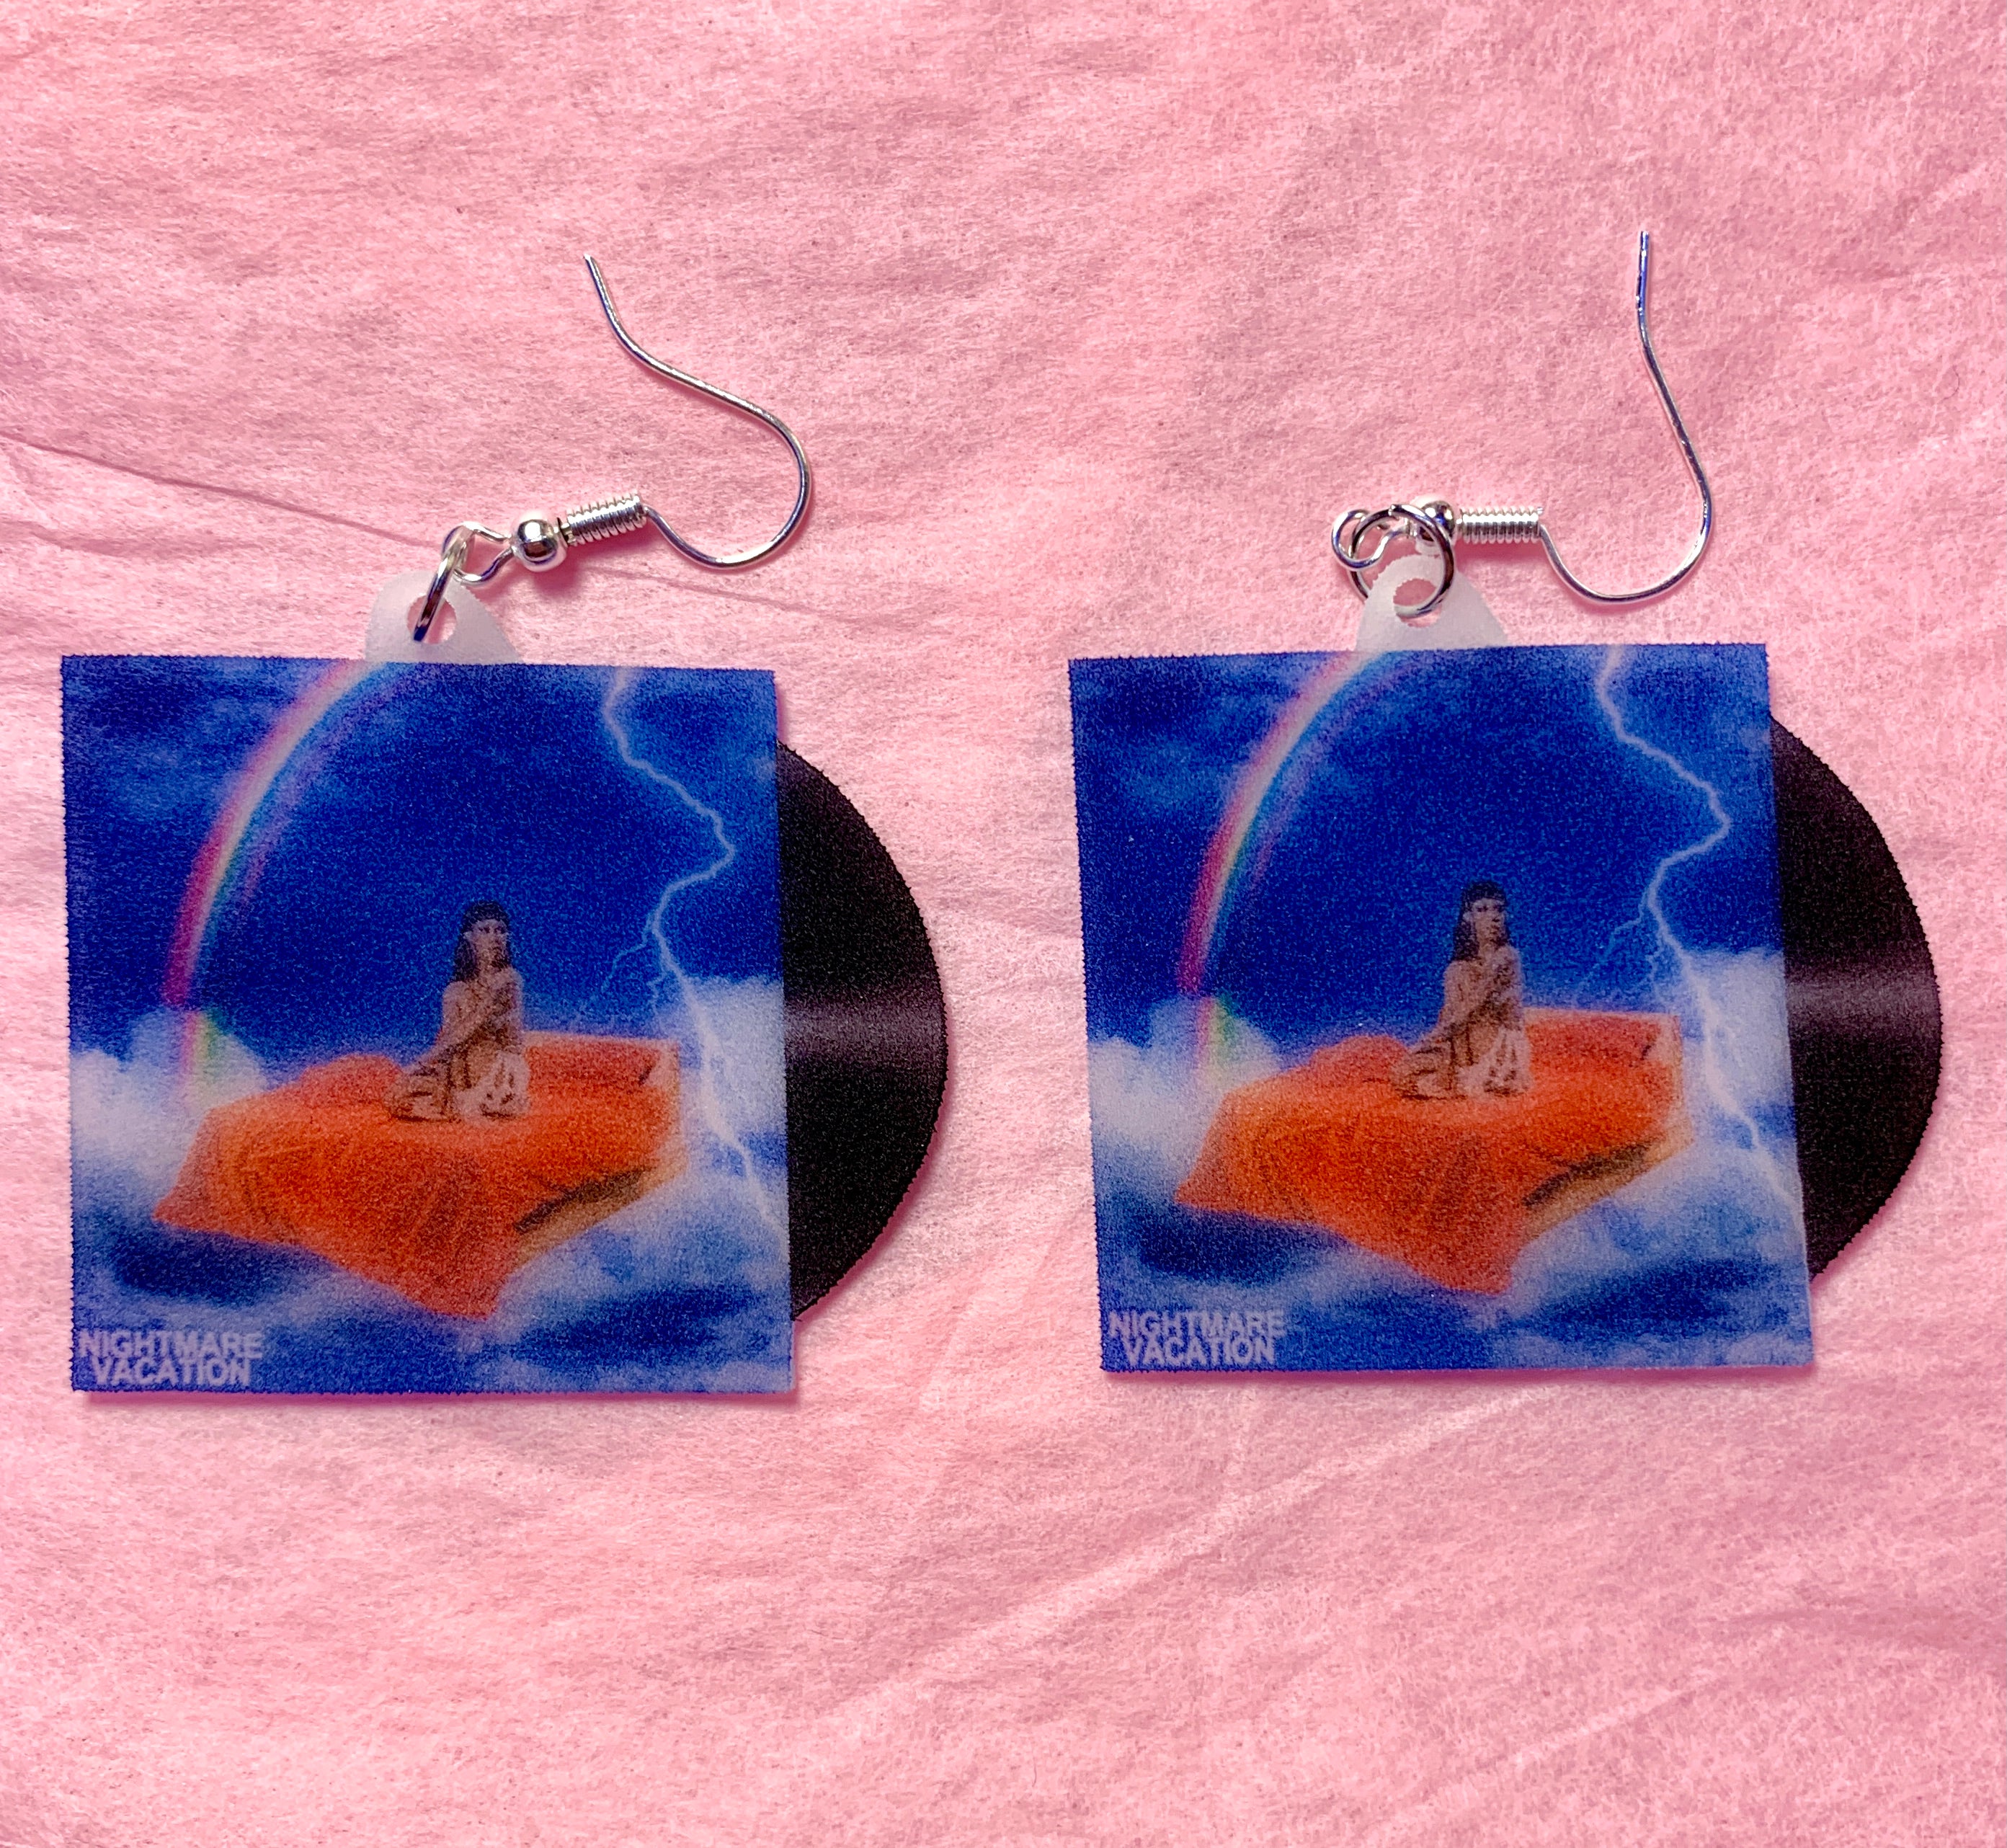 Rico Nasty Nightmare Vacation Vinyl Album Handmade Earrings!